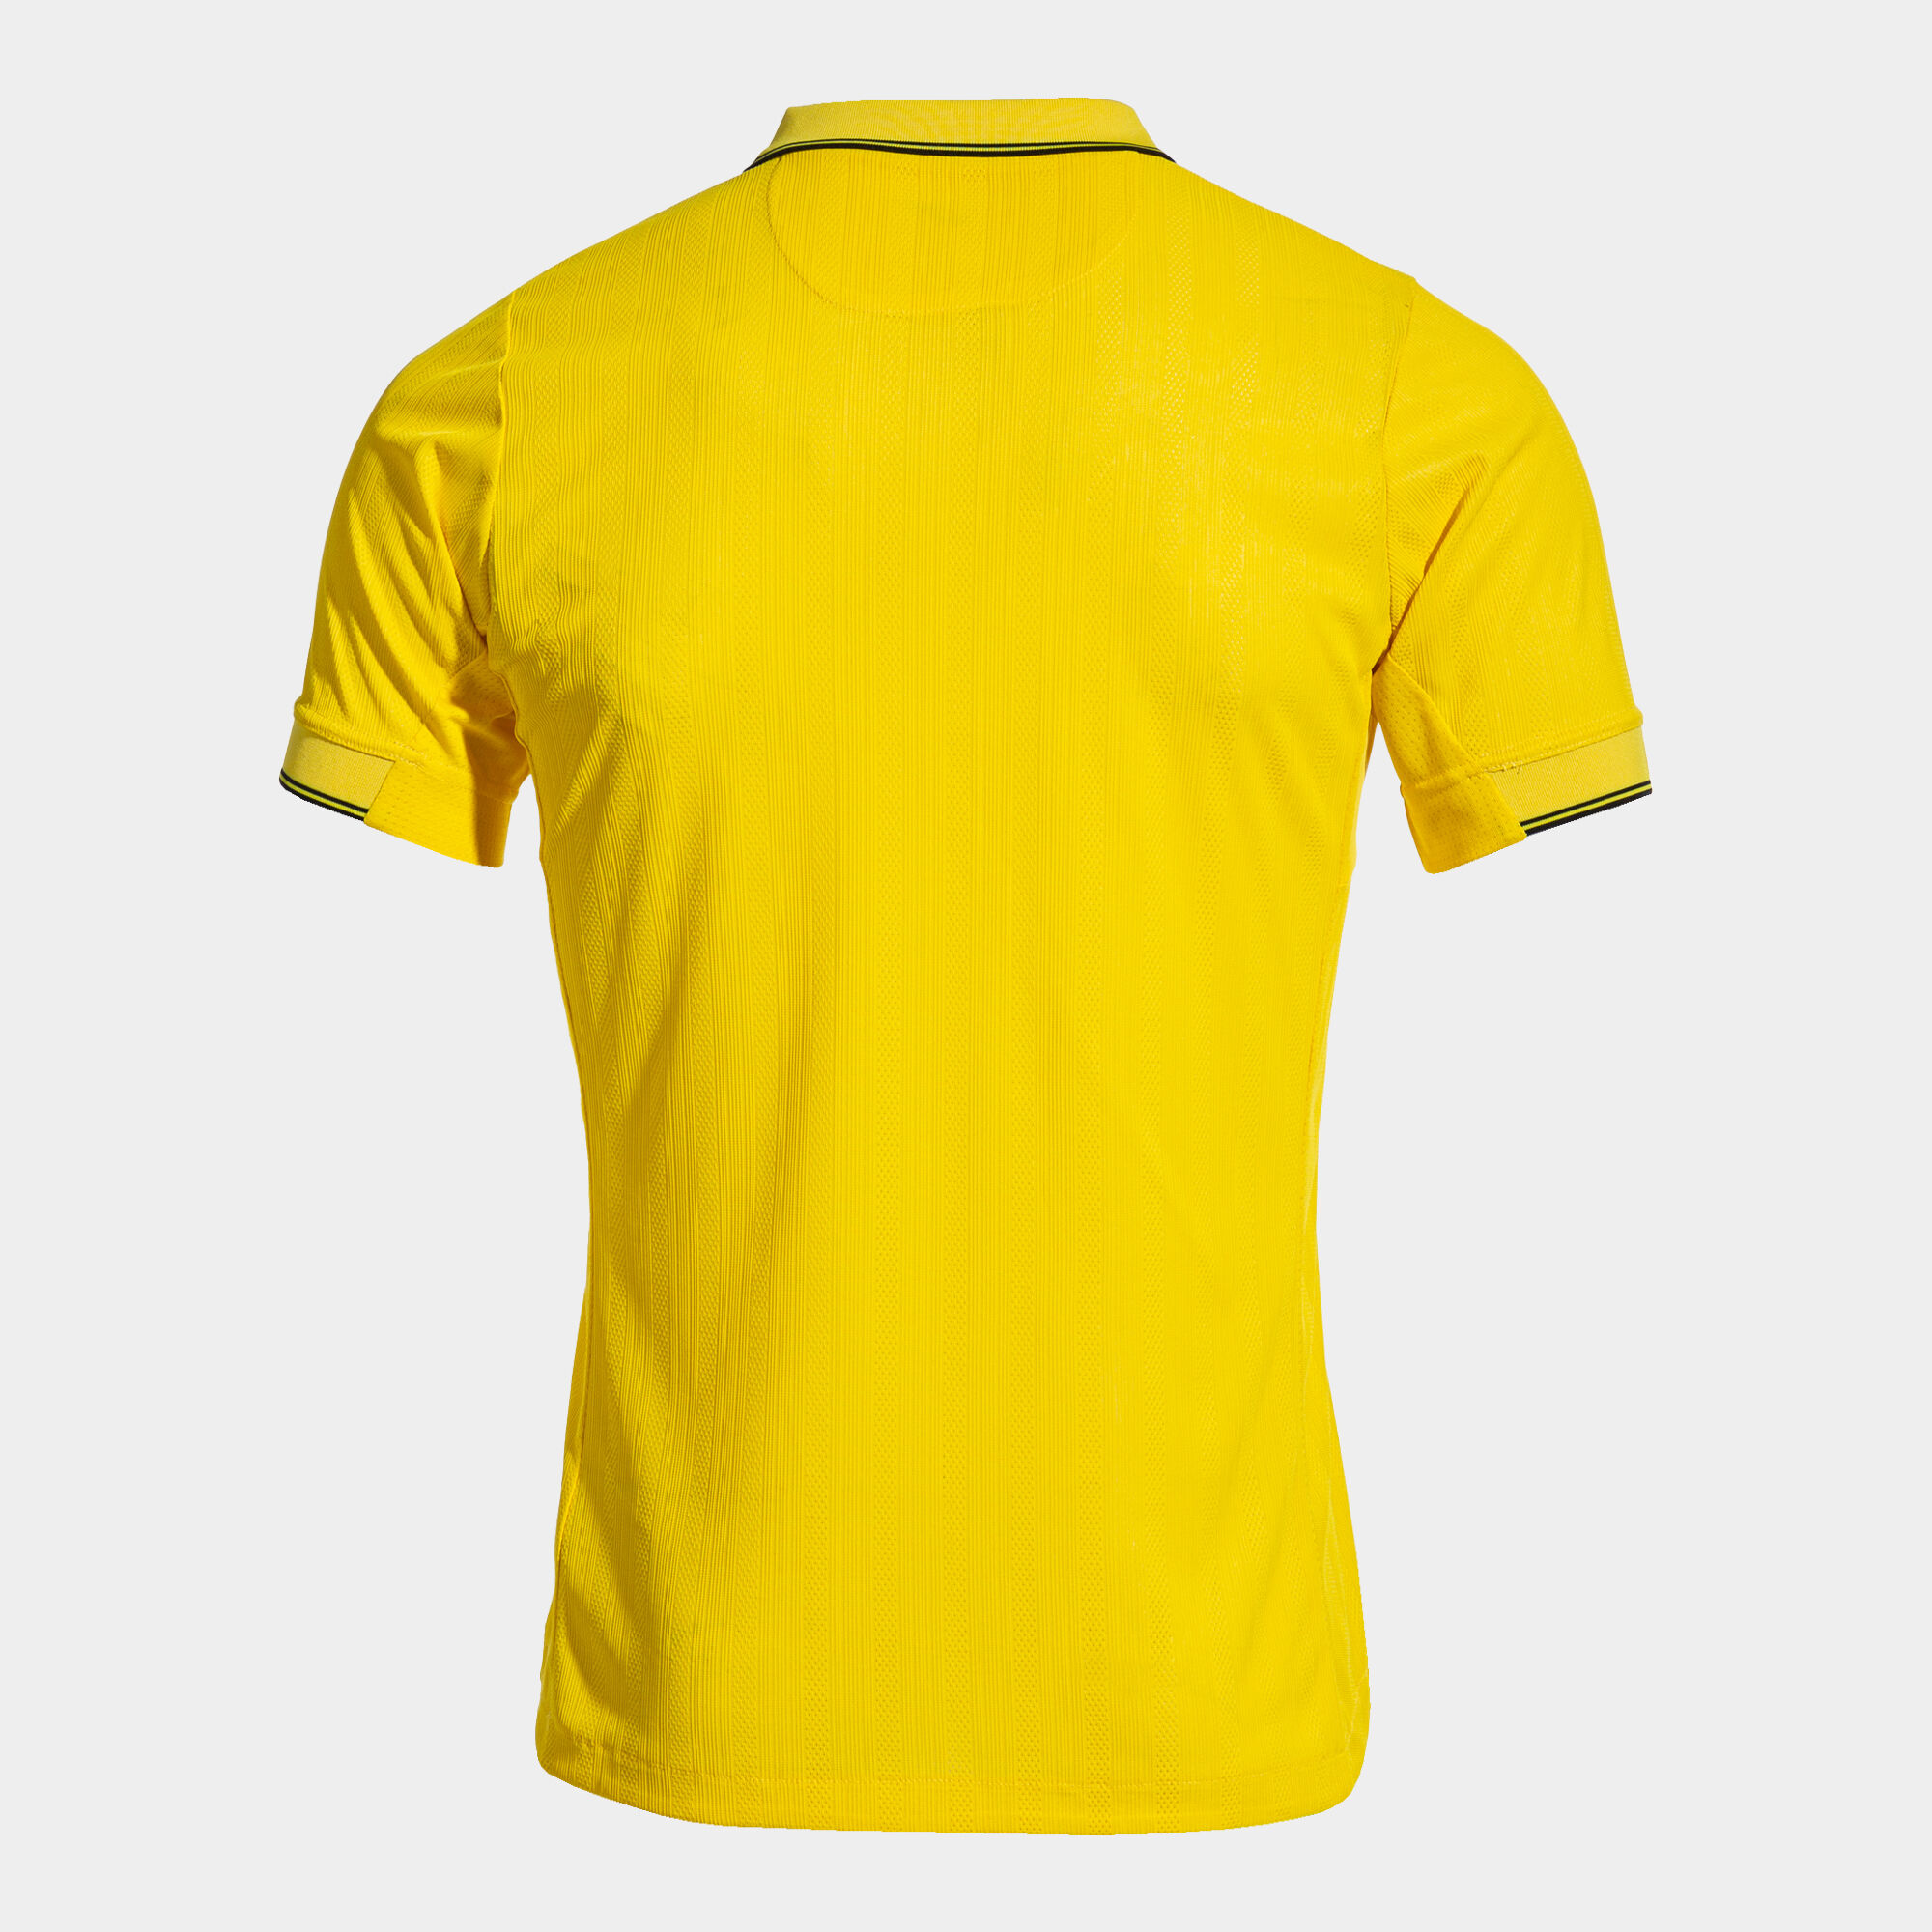 Camiseta manga corta hombre Fit one amarillo